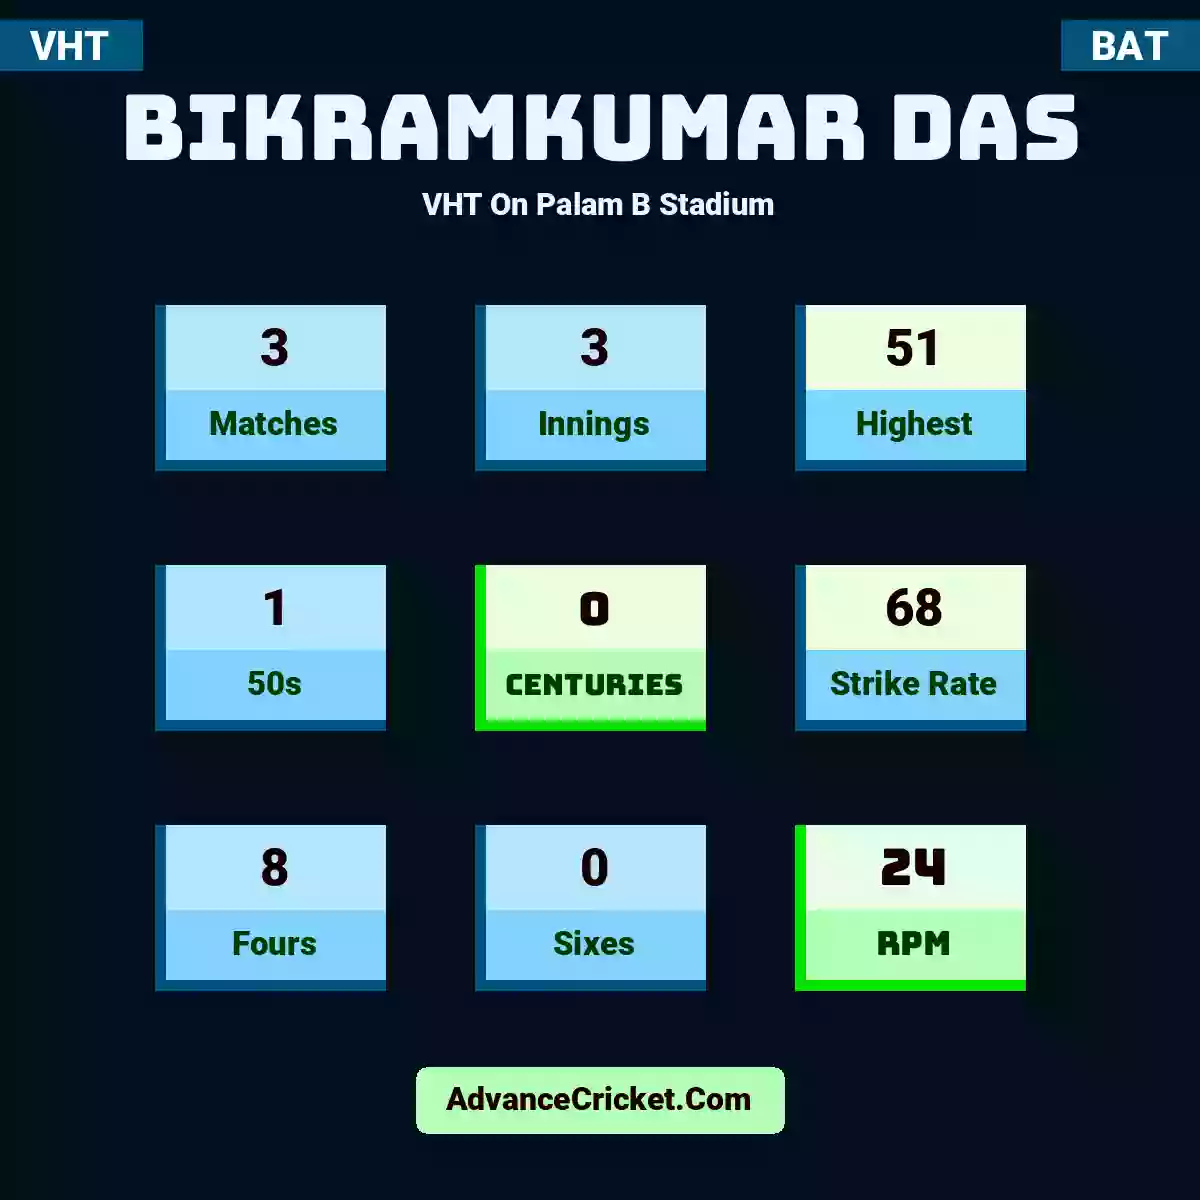 Bikramkumar Das VHT  On Palam B Stadium, Bikramkumar Das played 3 matches, scored 51 runs as highest, 1 half-centuries, and 0 centuries, with a strike rate of 68. B.Das hit 8 fours and 0 sixes, with an RPM of 24.